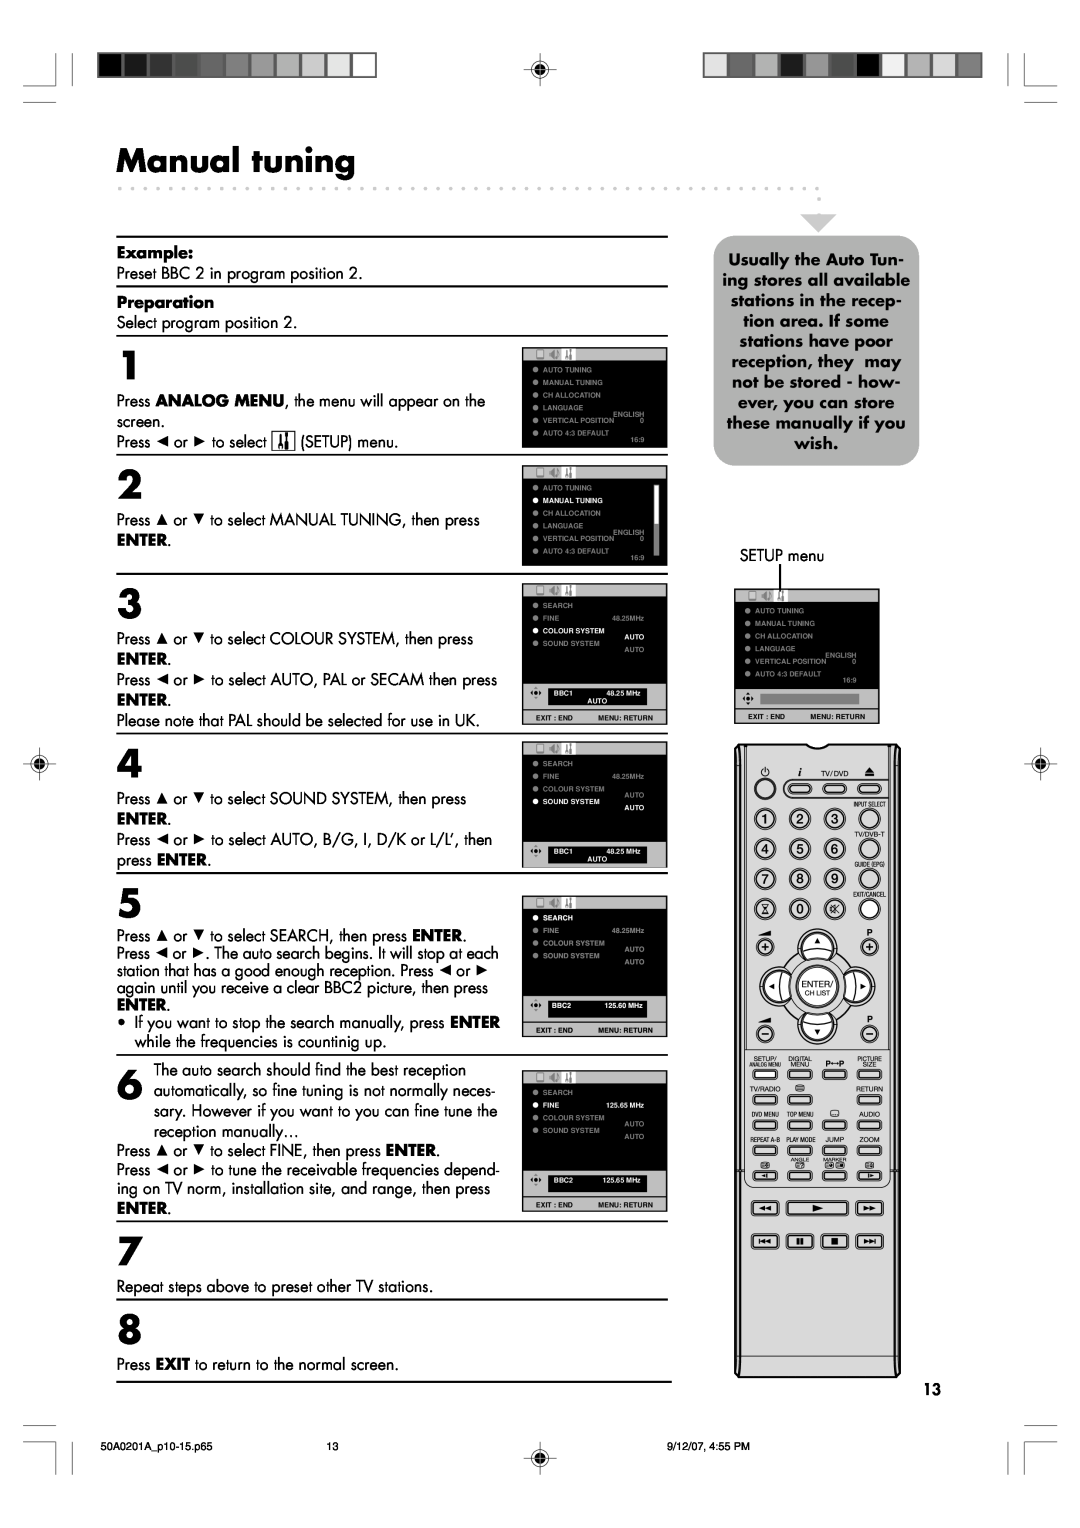 Sansui TV19PL120DVD instruction manual Manual tuning, Example, Preparation, Enter 